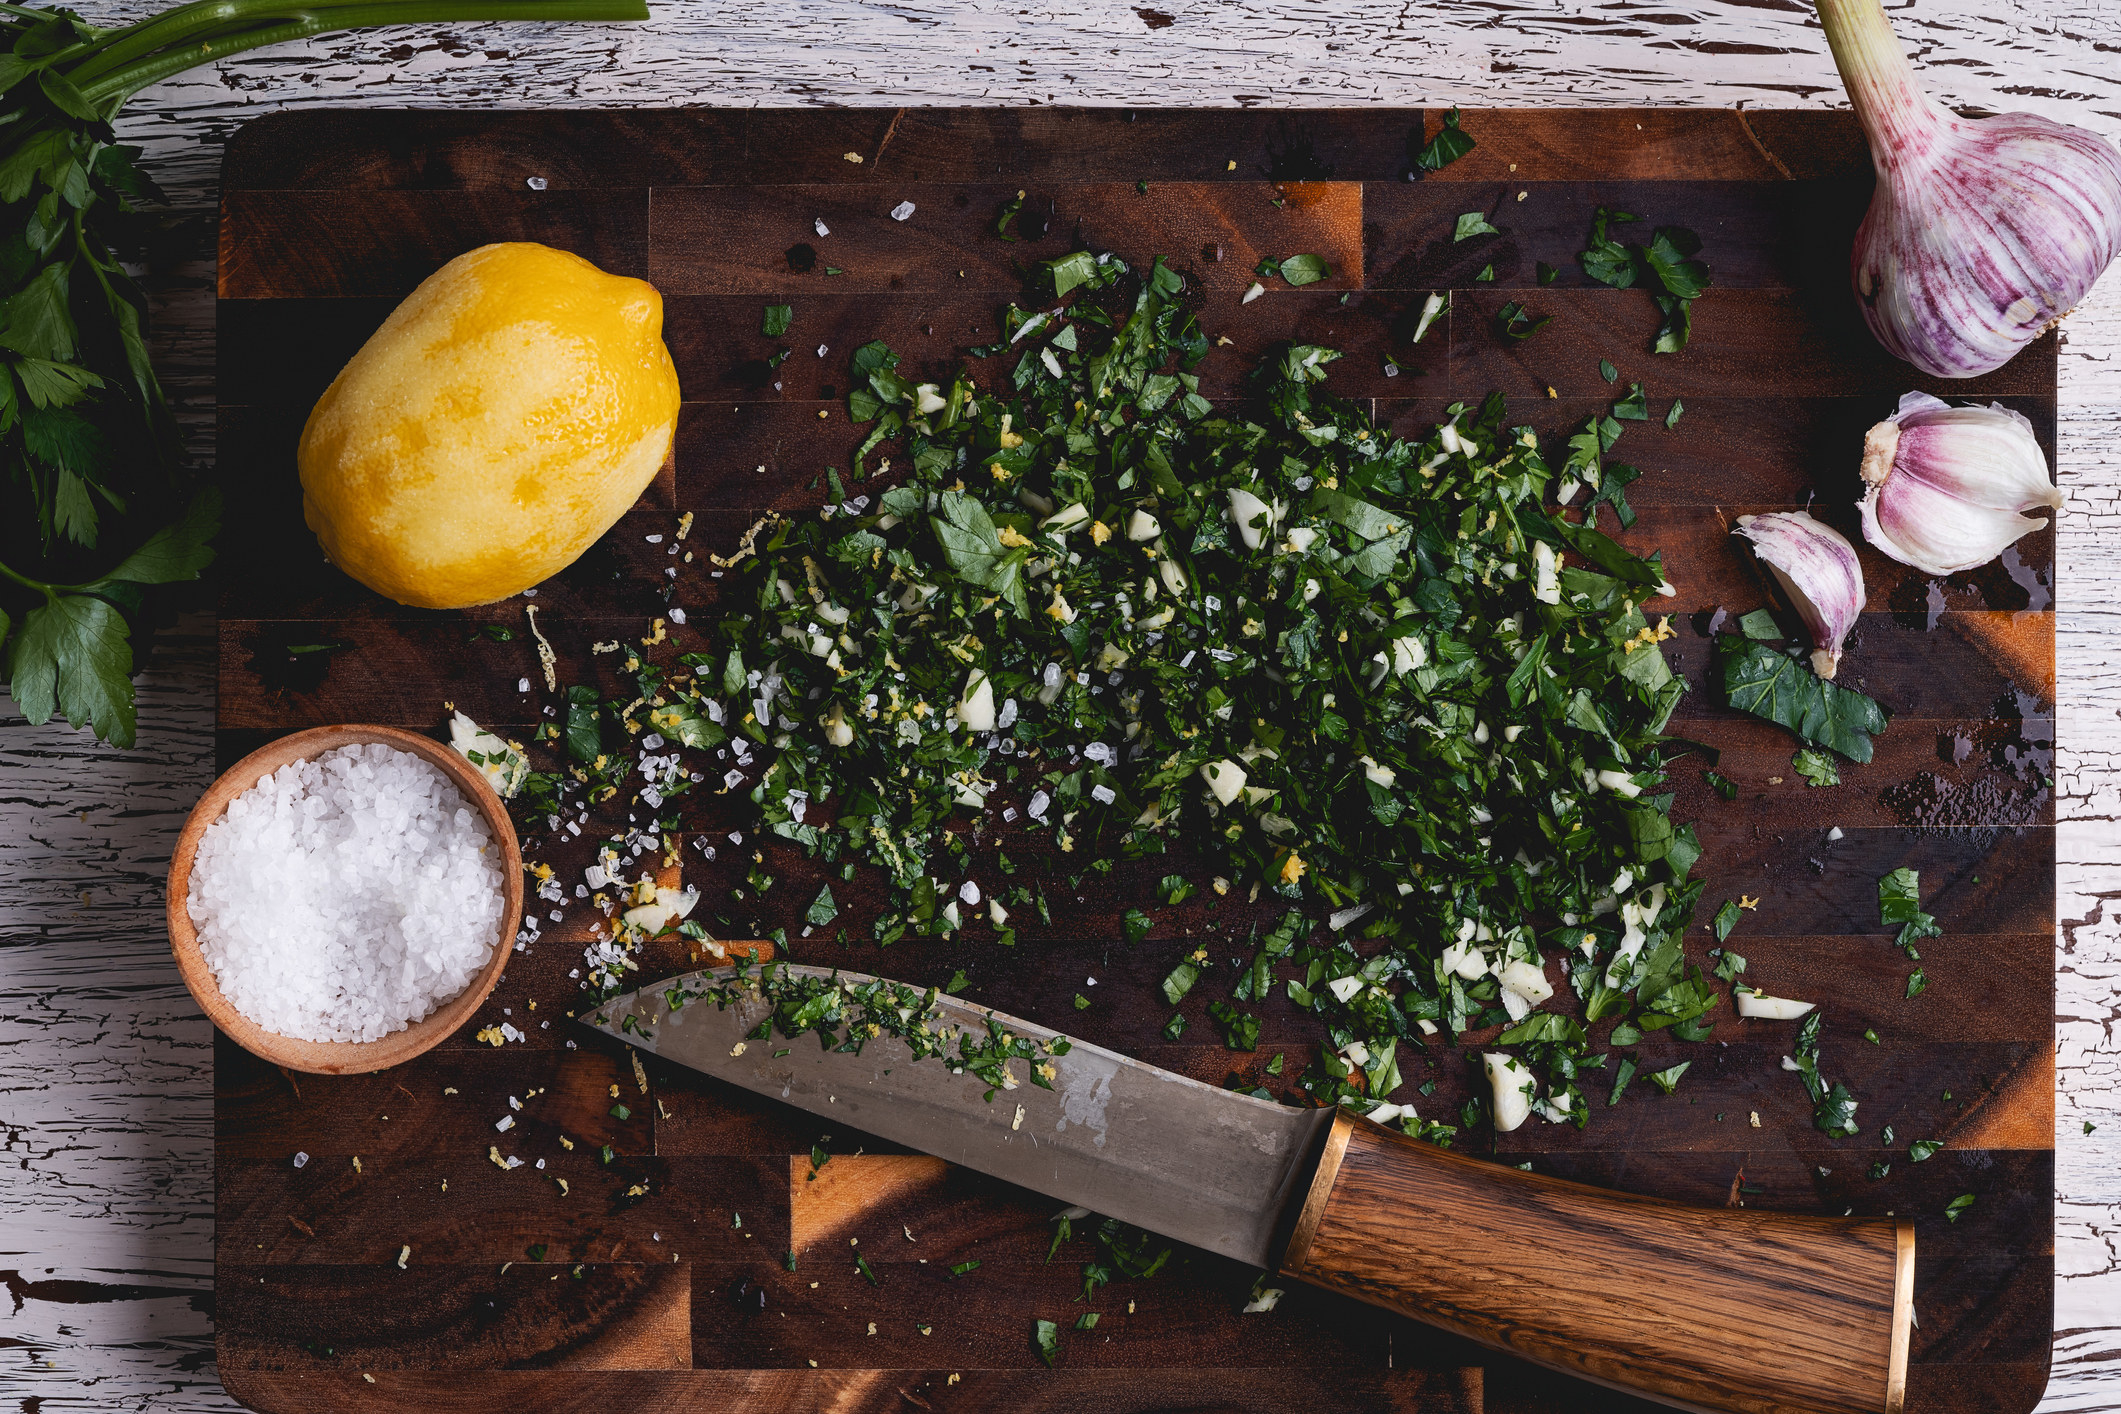 Chopped herbs, salt, lemon, and garlic on a cutting board.